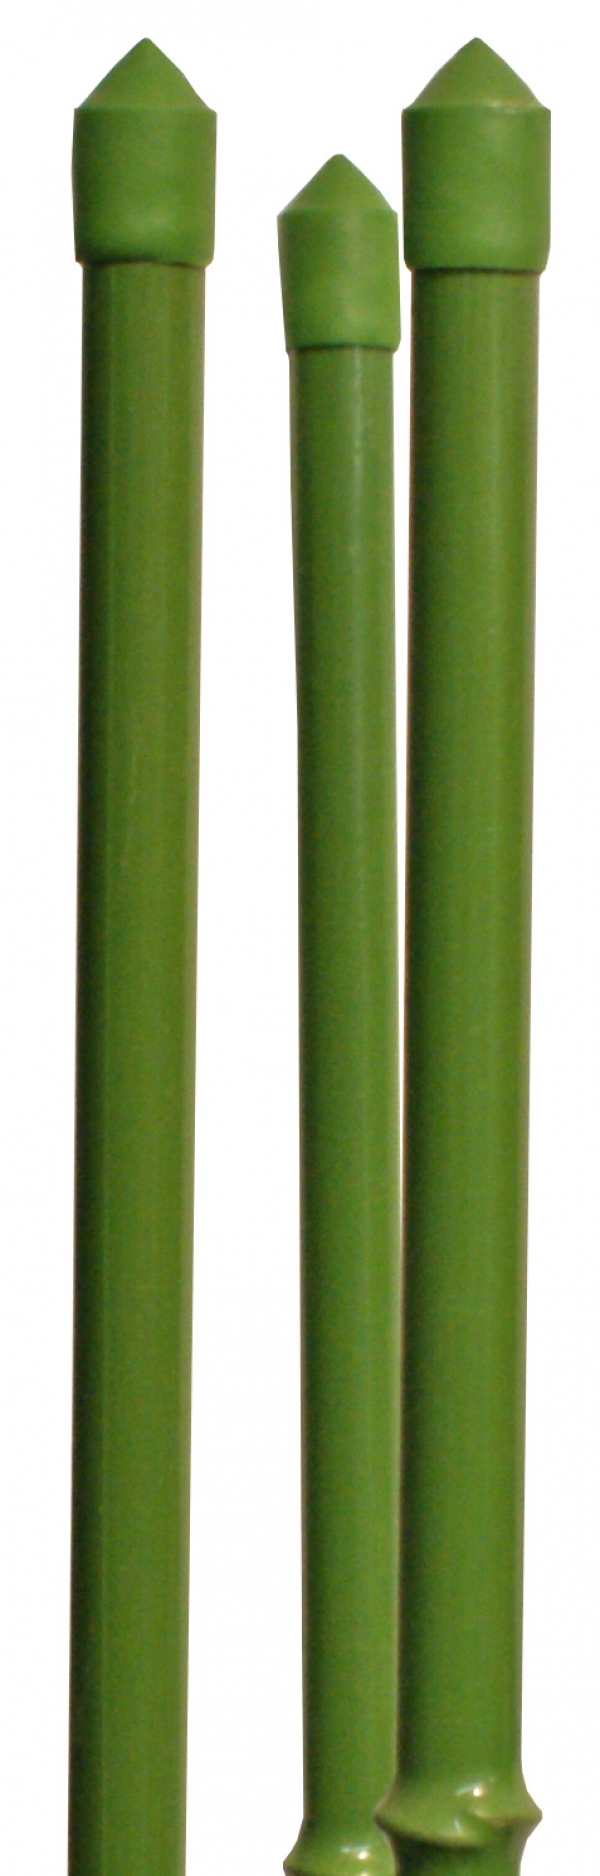  Taimetugi roheline 150cm x 11mm 